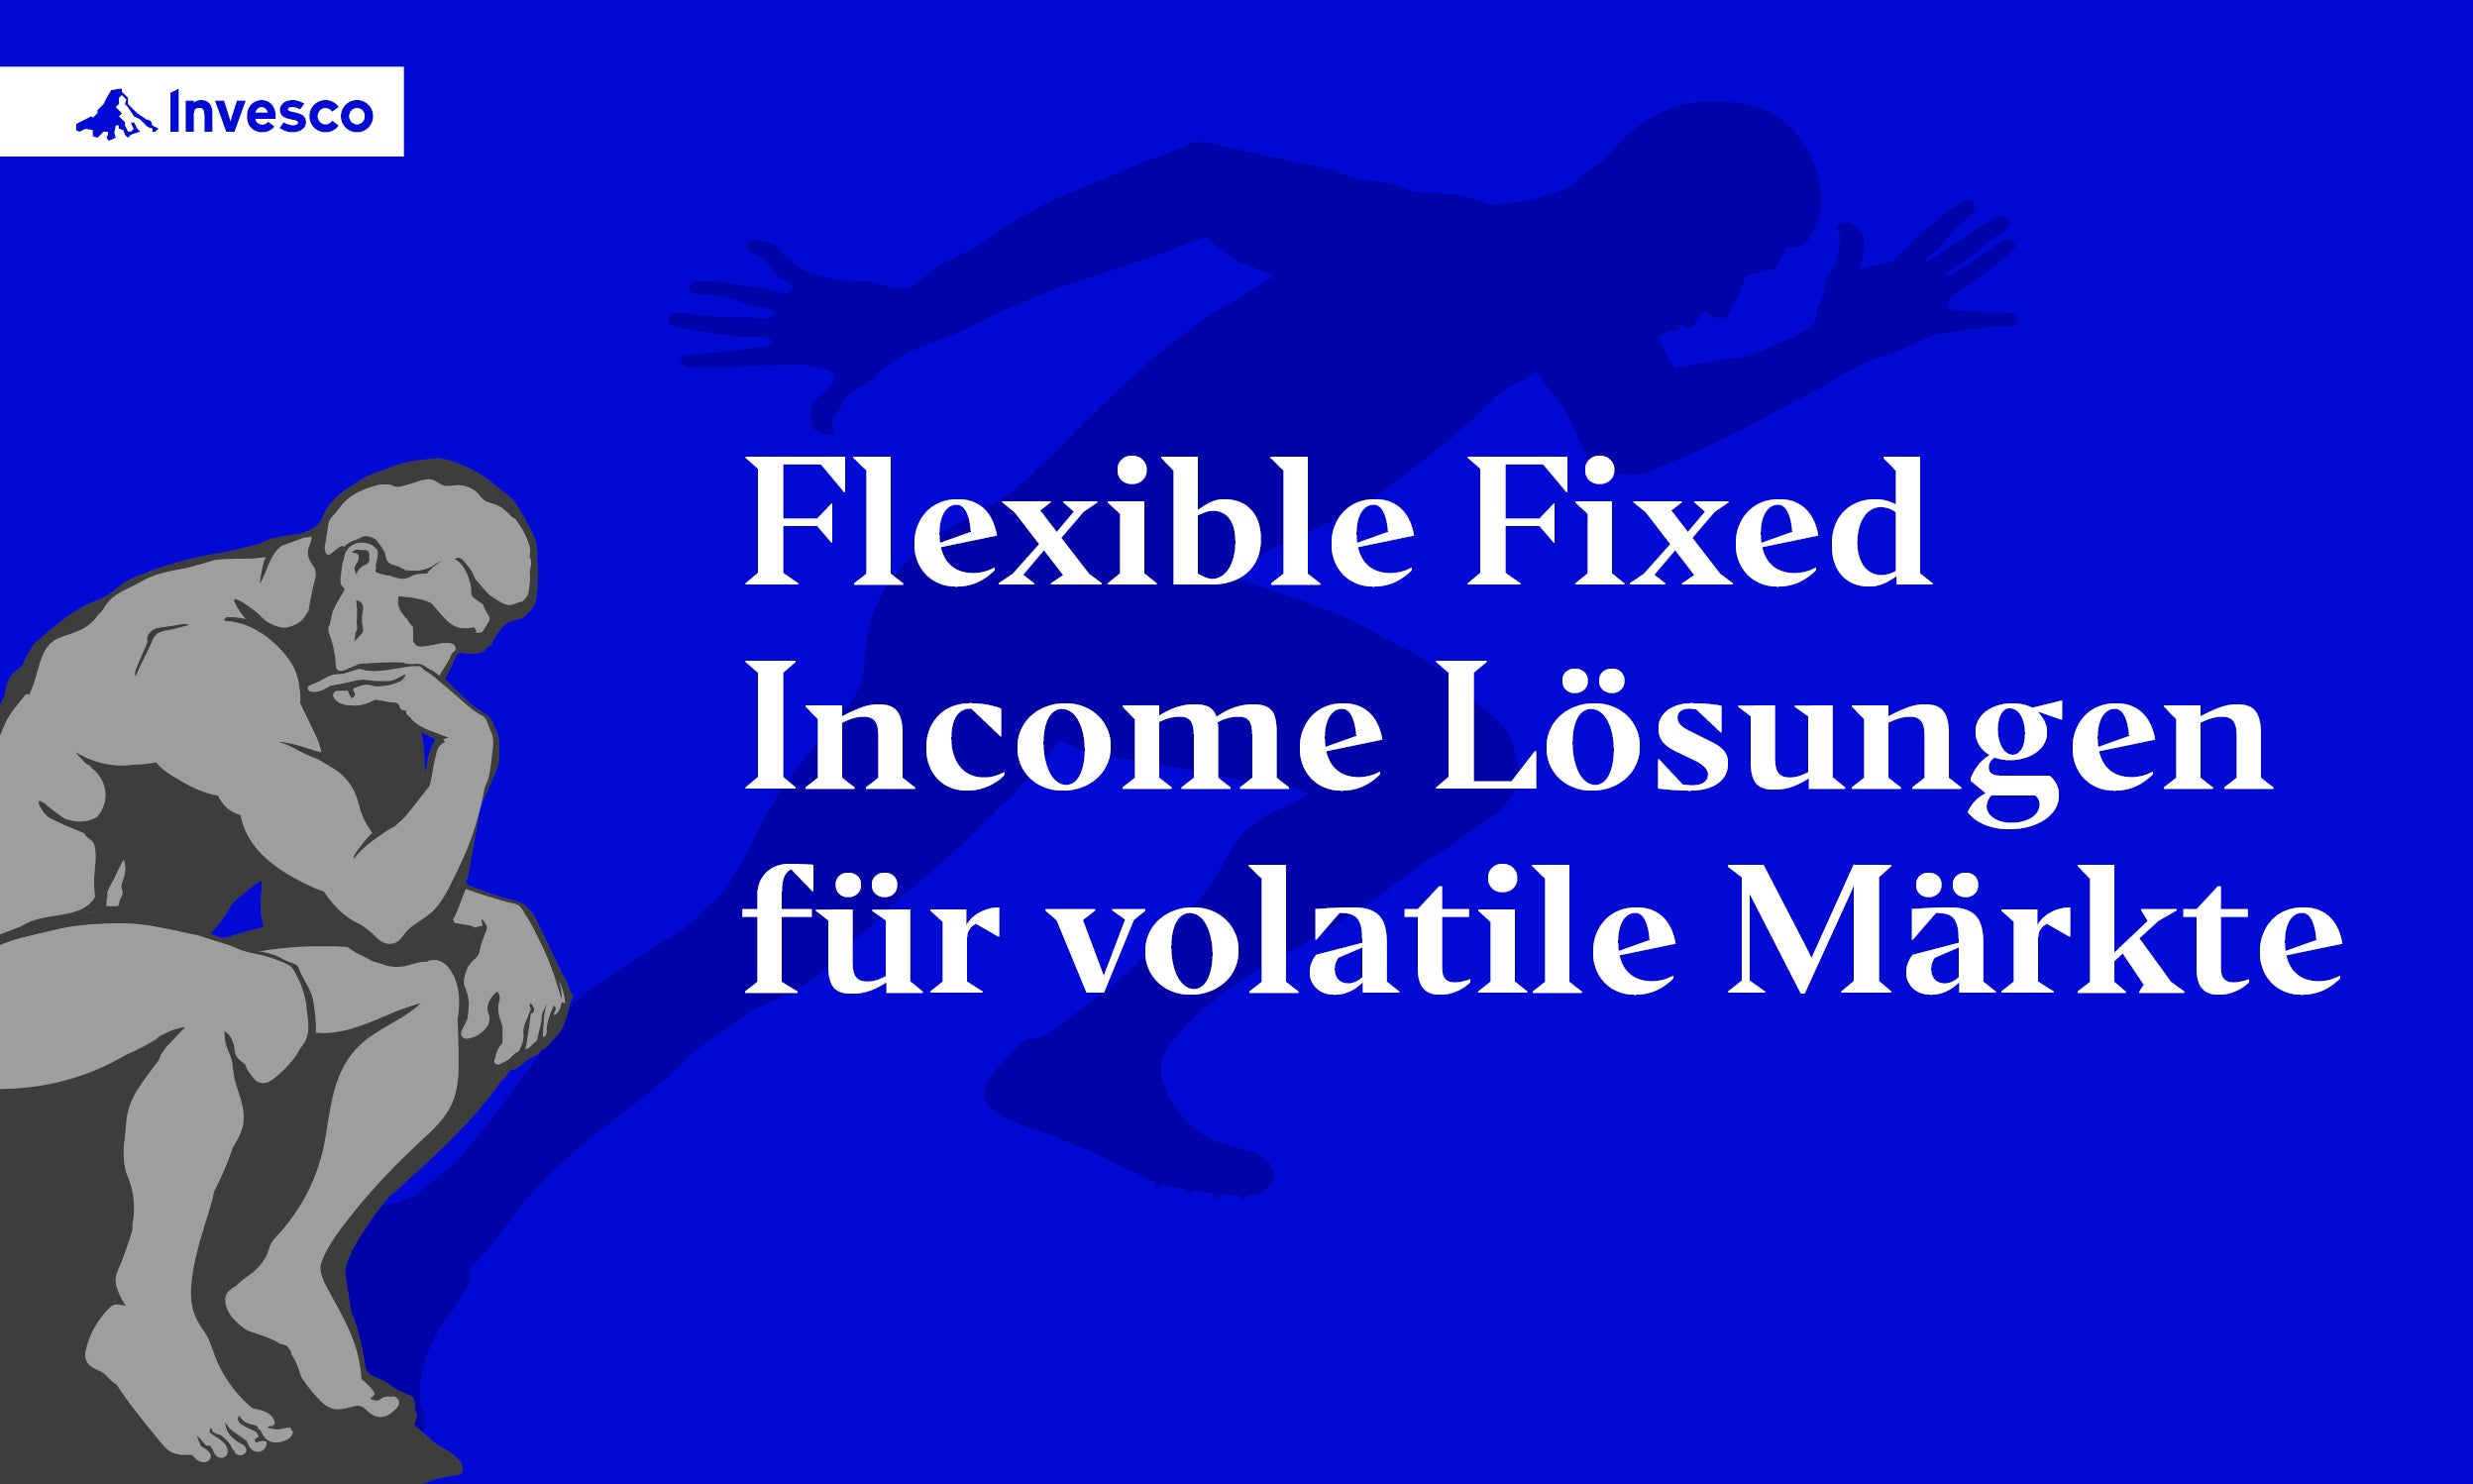 Webinar: Flexible Fixed Income Lösungen für volatile Märkte